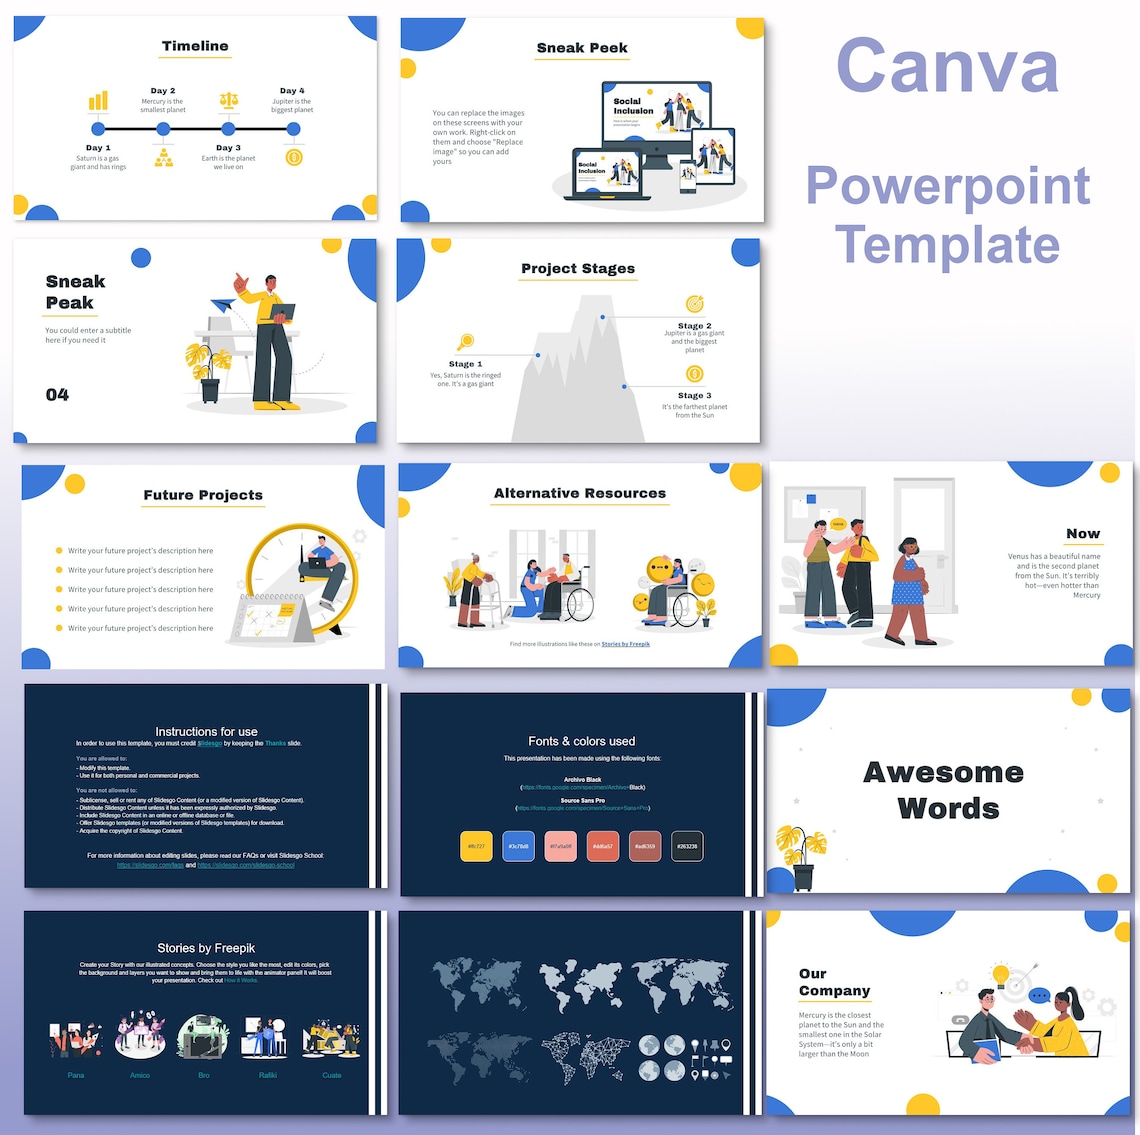 Canva Business Presentation PowerPoint Template #77848